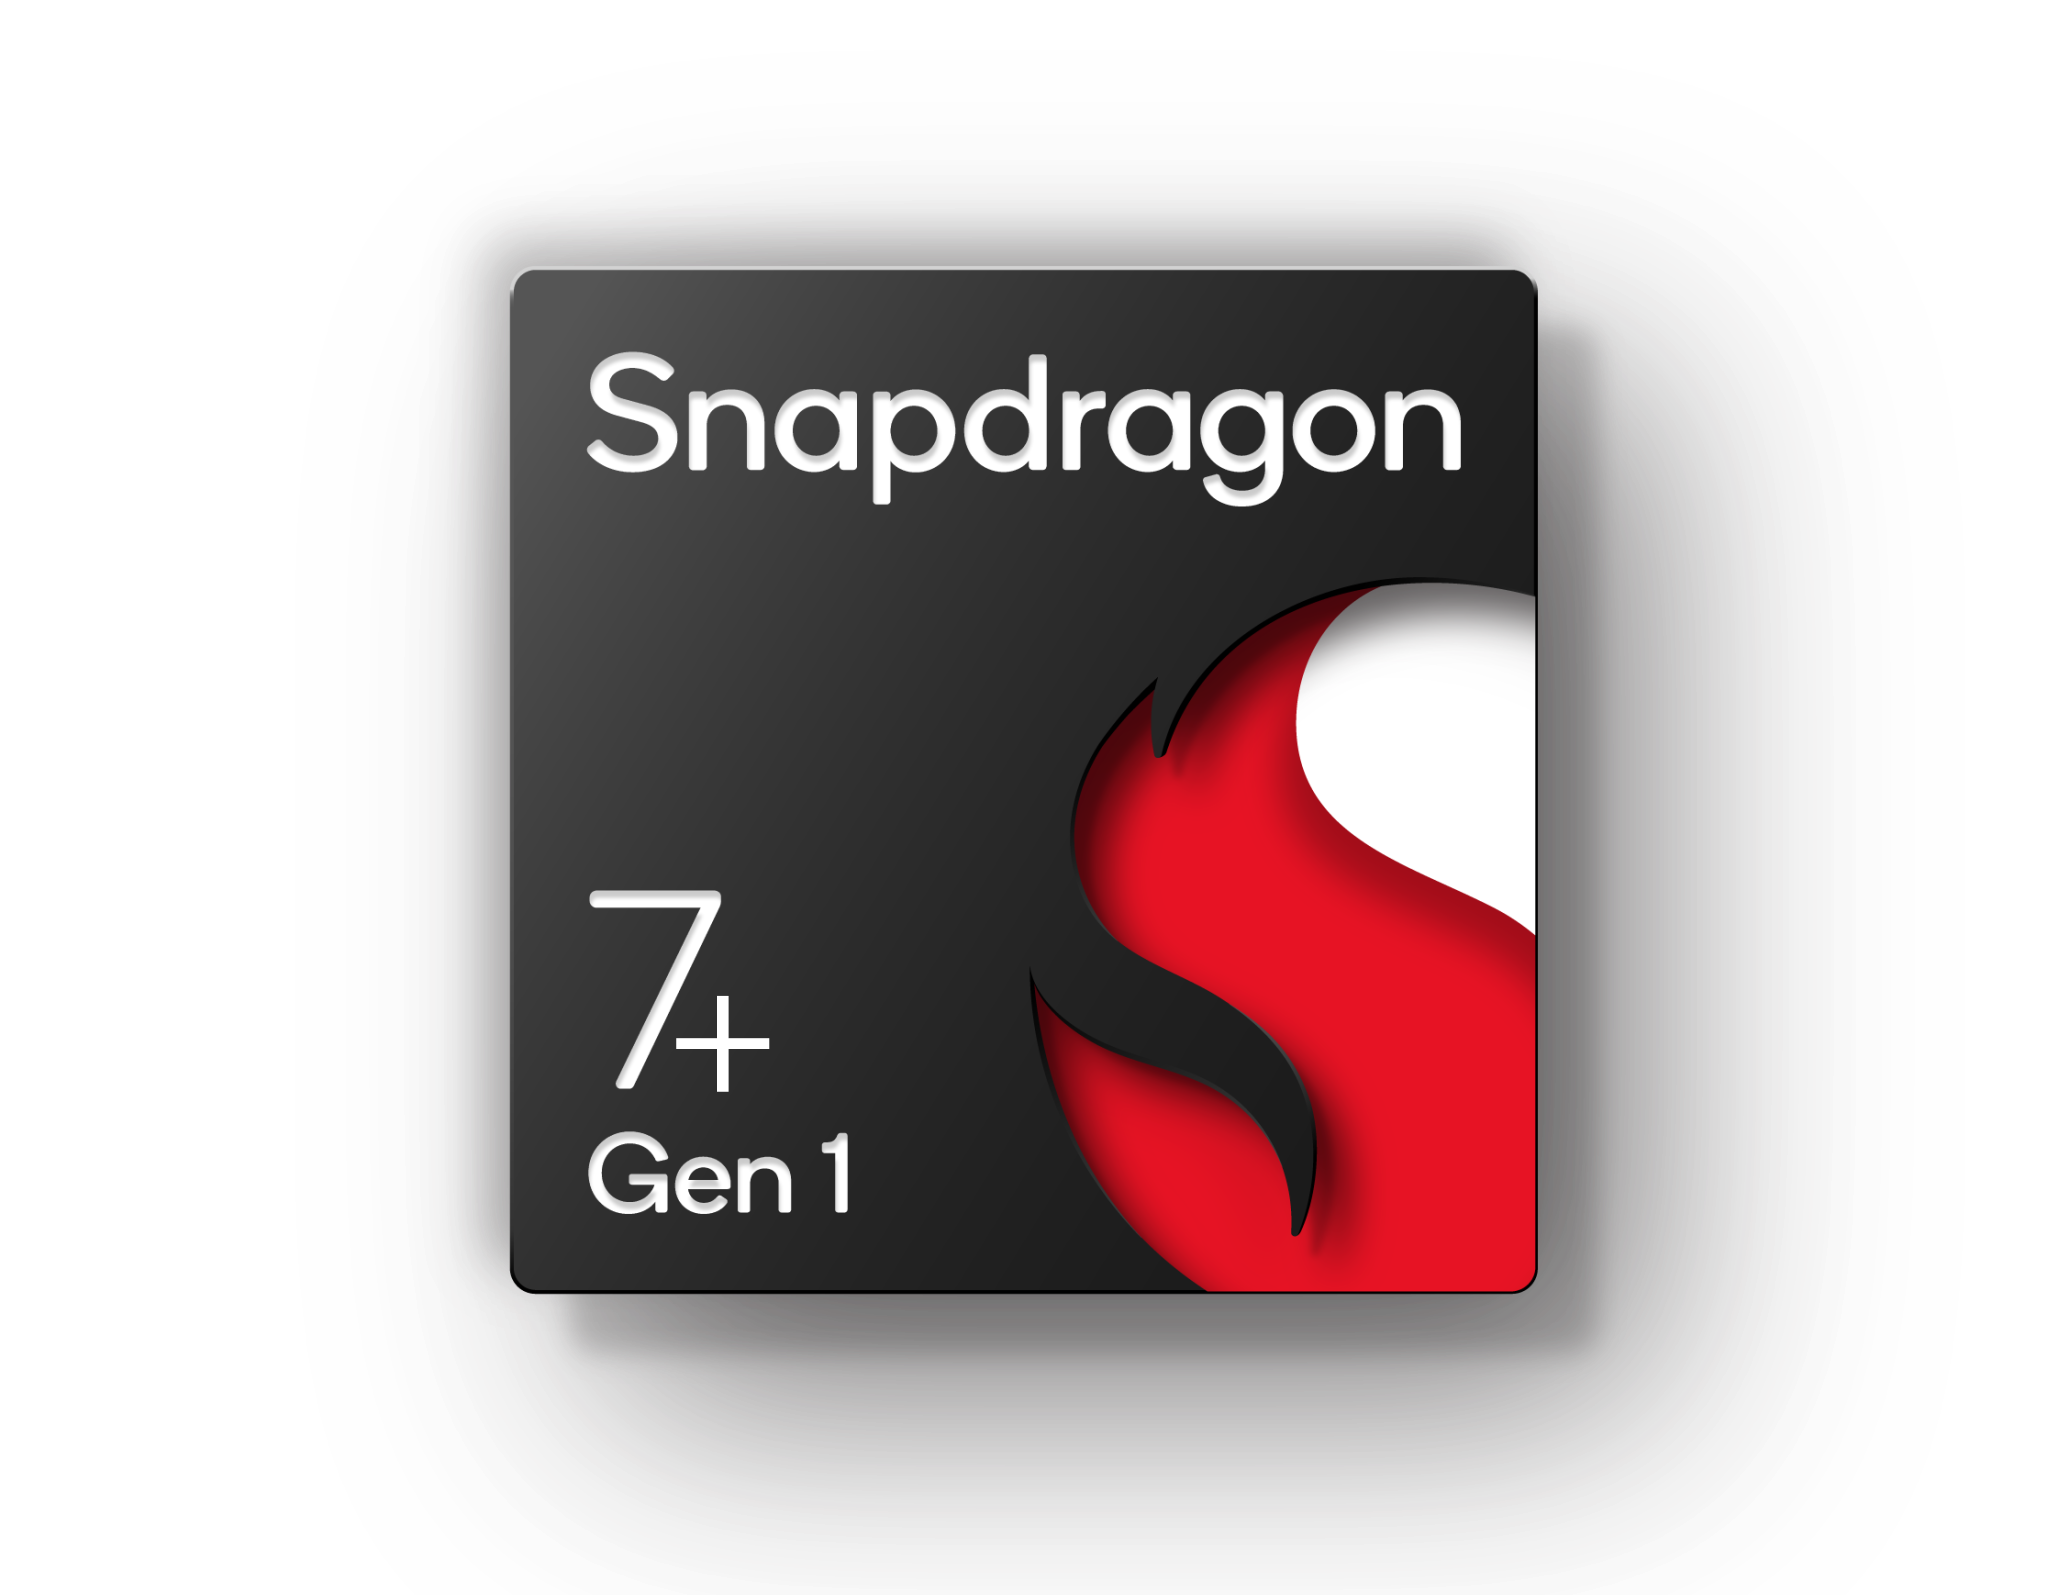 Qualcomm Snapdragon 7 Gen 1: Underclocked Snapdragon 8 Gen 1 to Launch on March 17